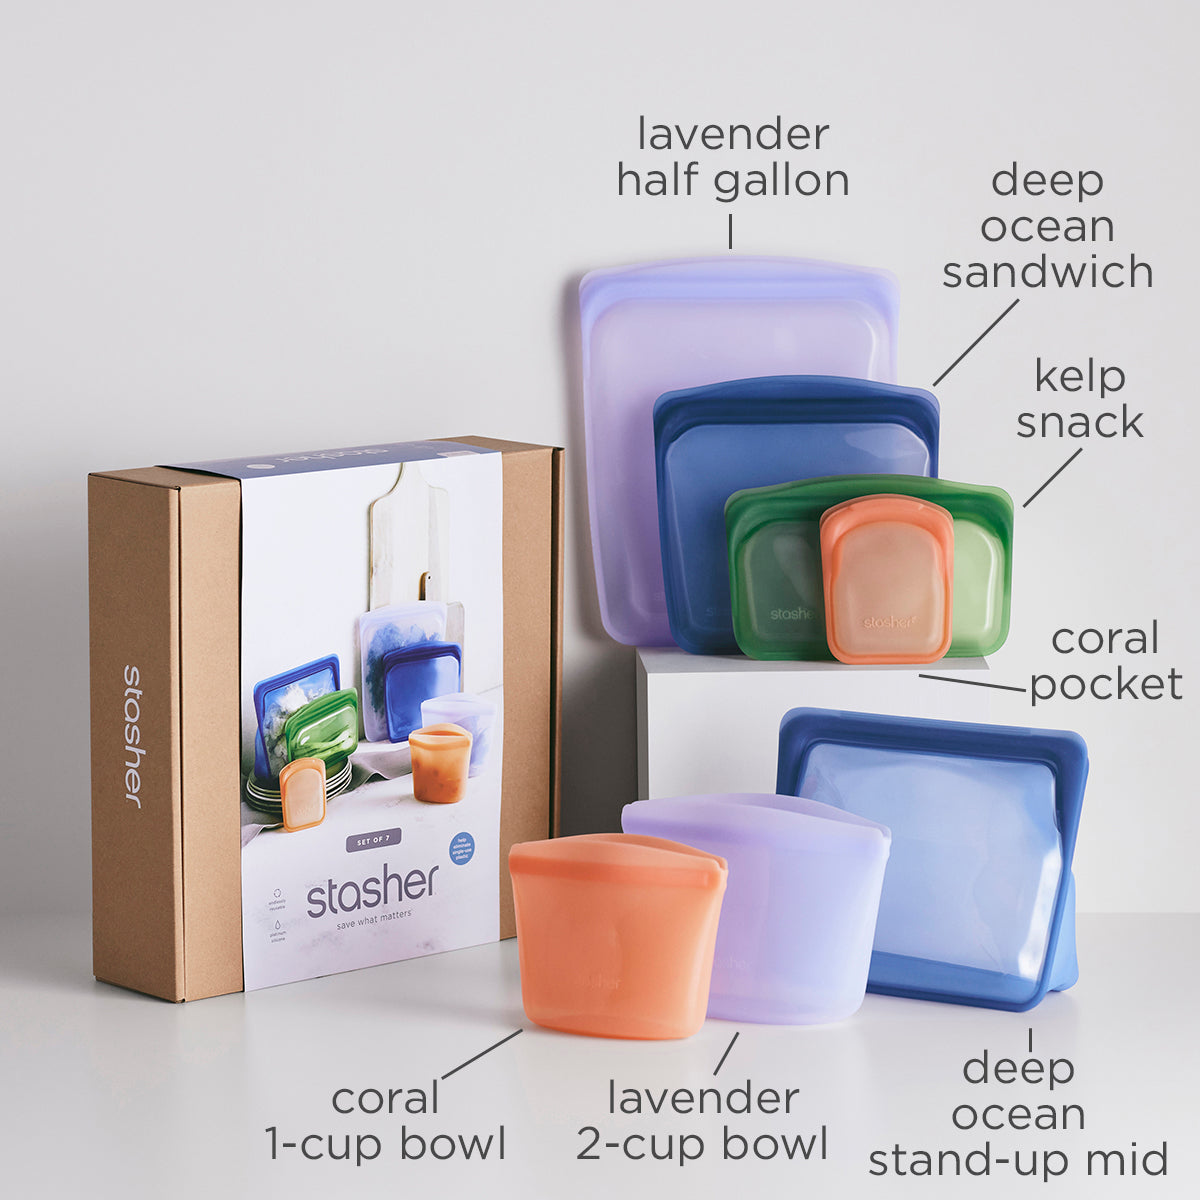 ocean forest gift box: stasher reusable bag and bowl set